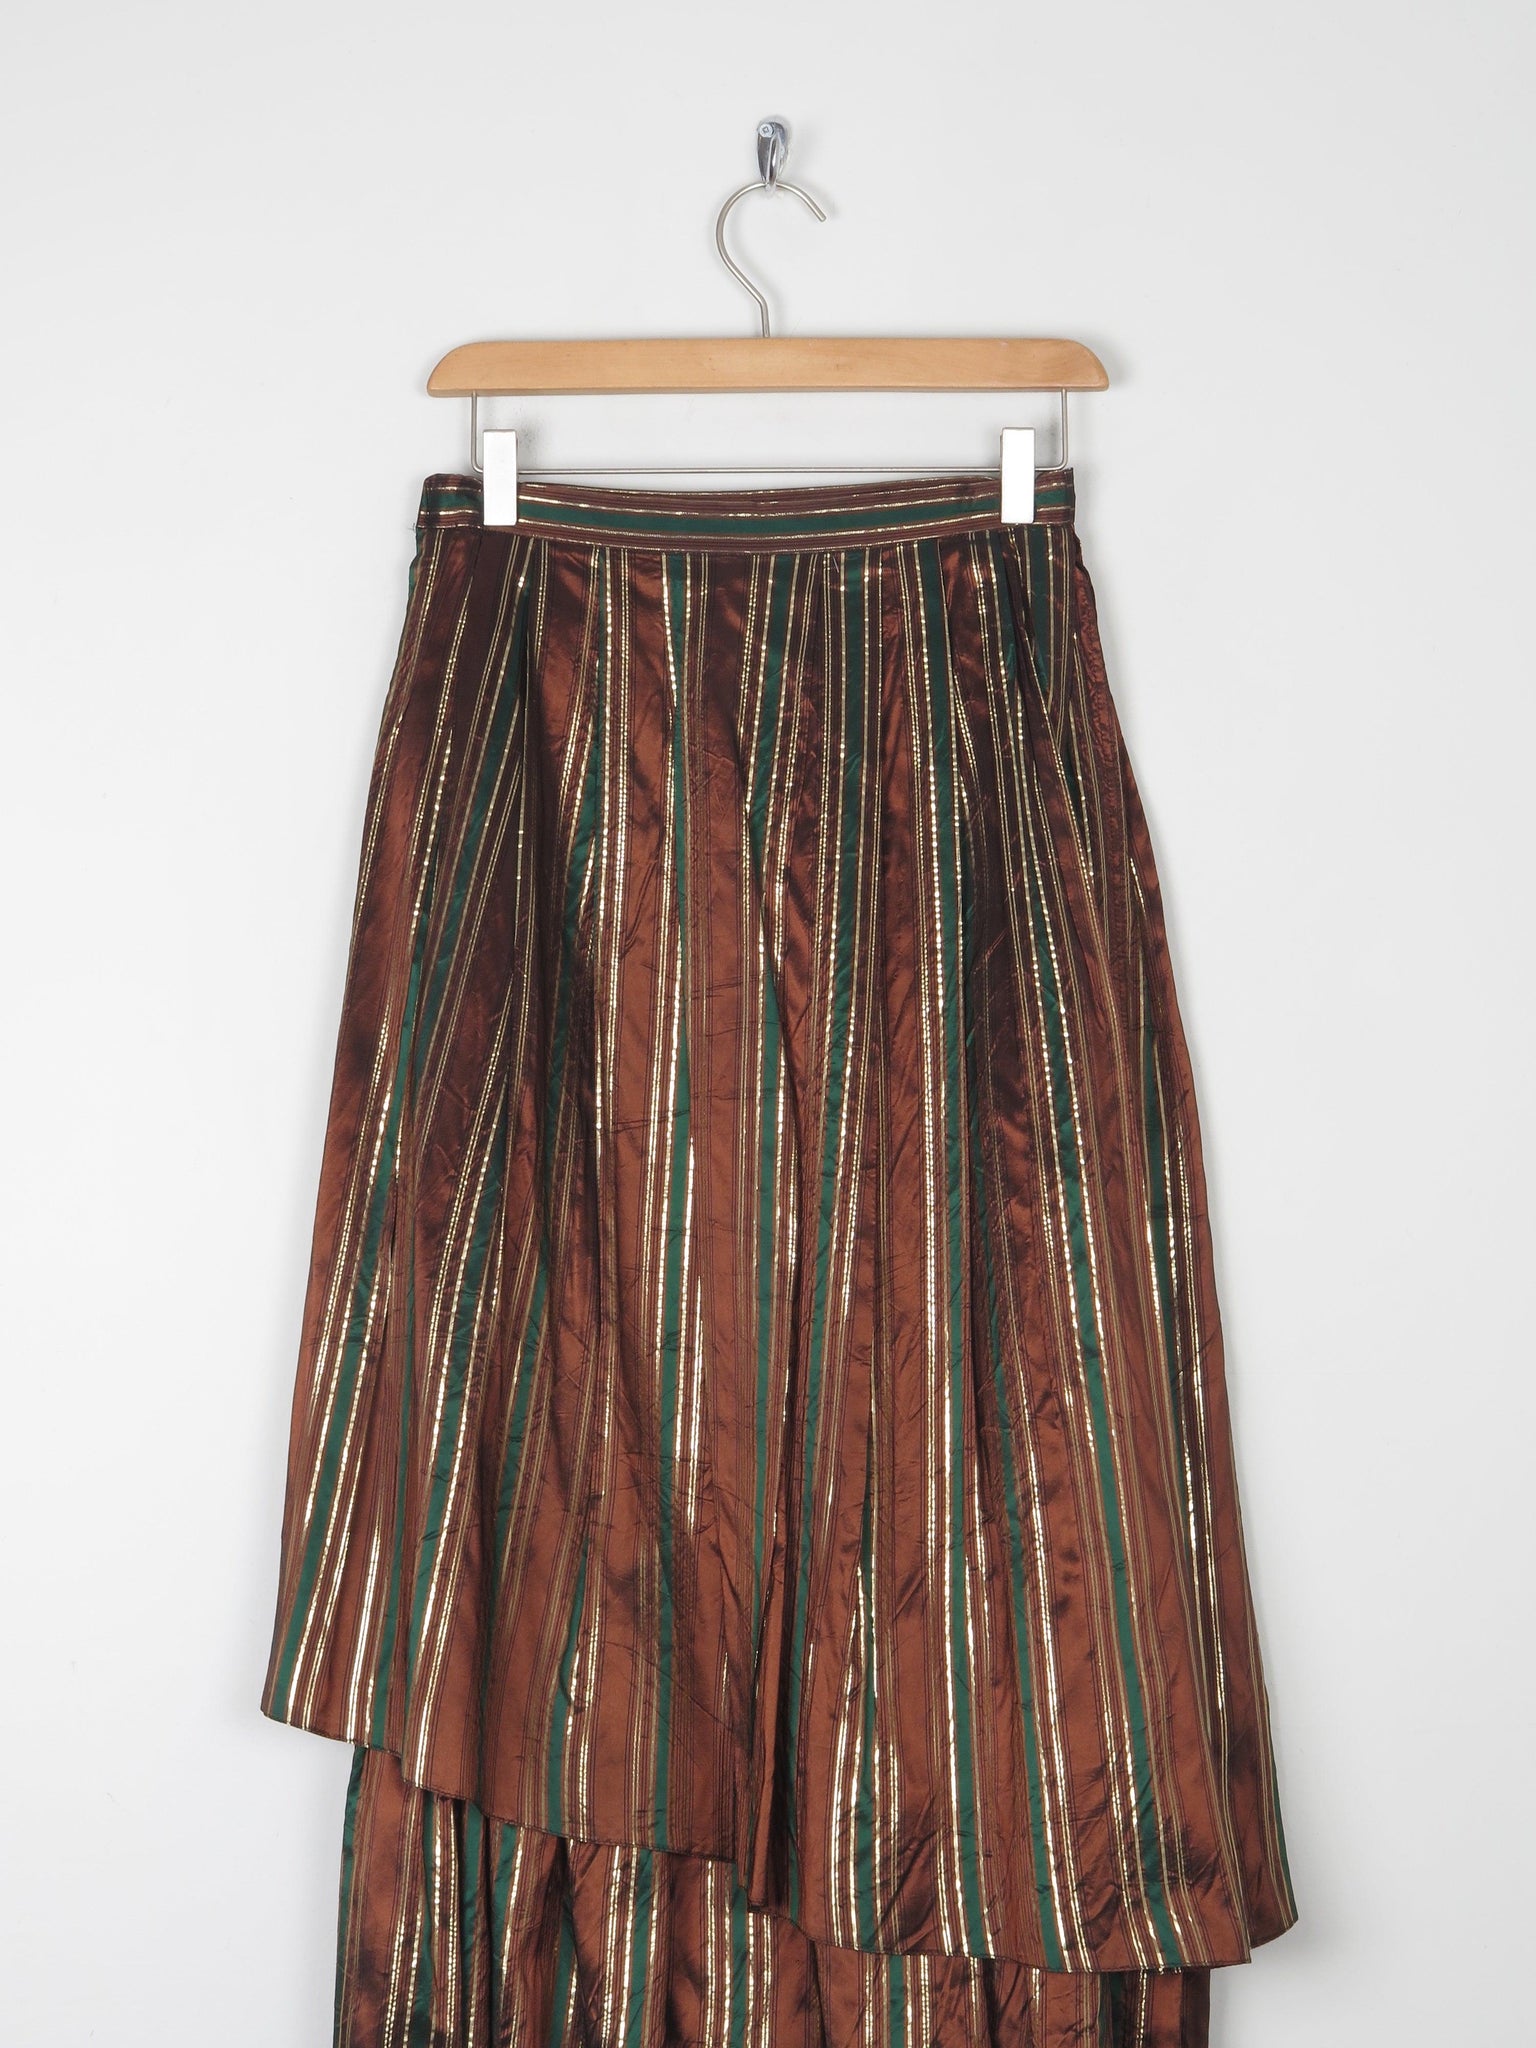 Sparkly Midi Taffeta Layered Vintage Skirt 26" XS - The Harlequin